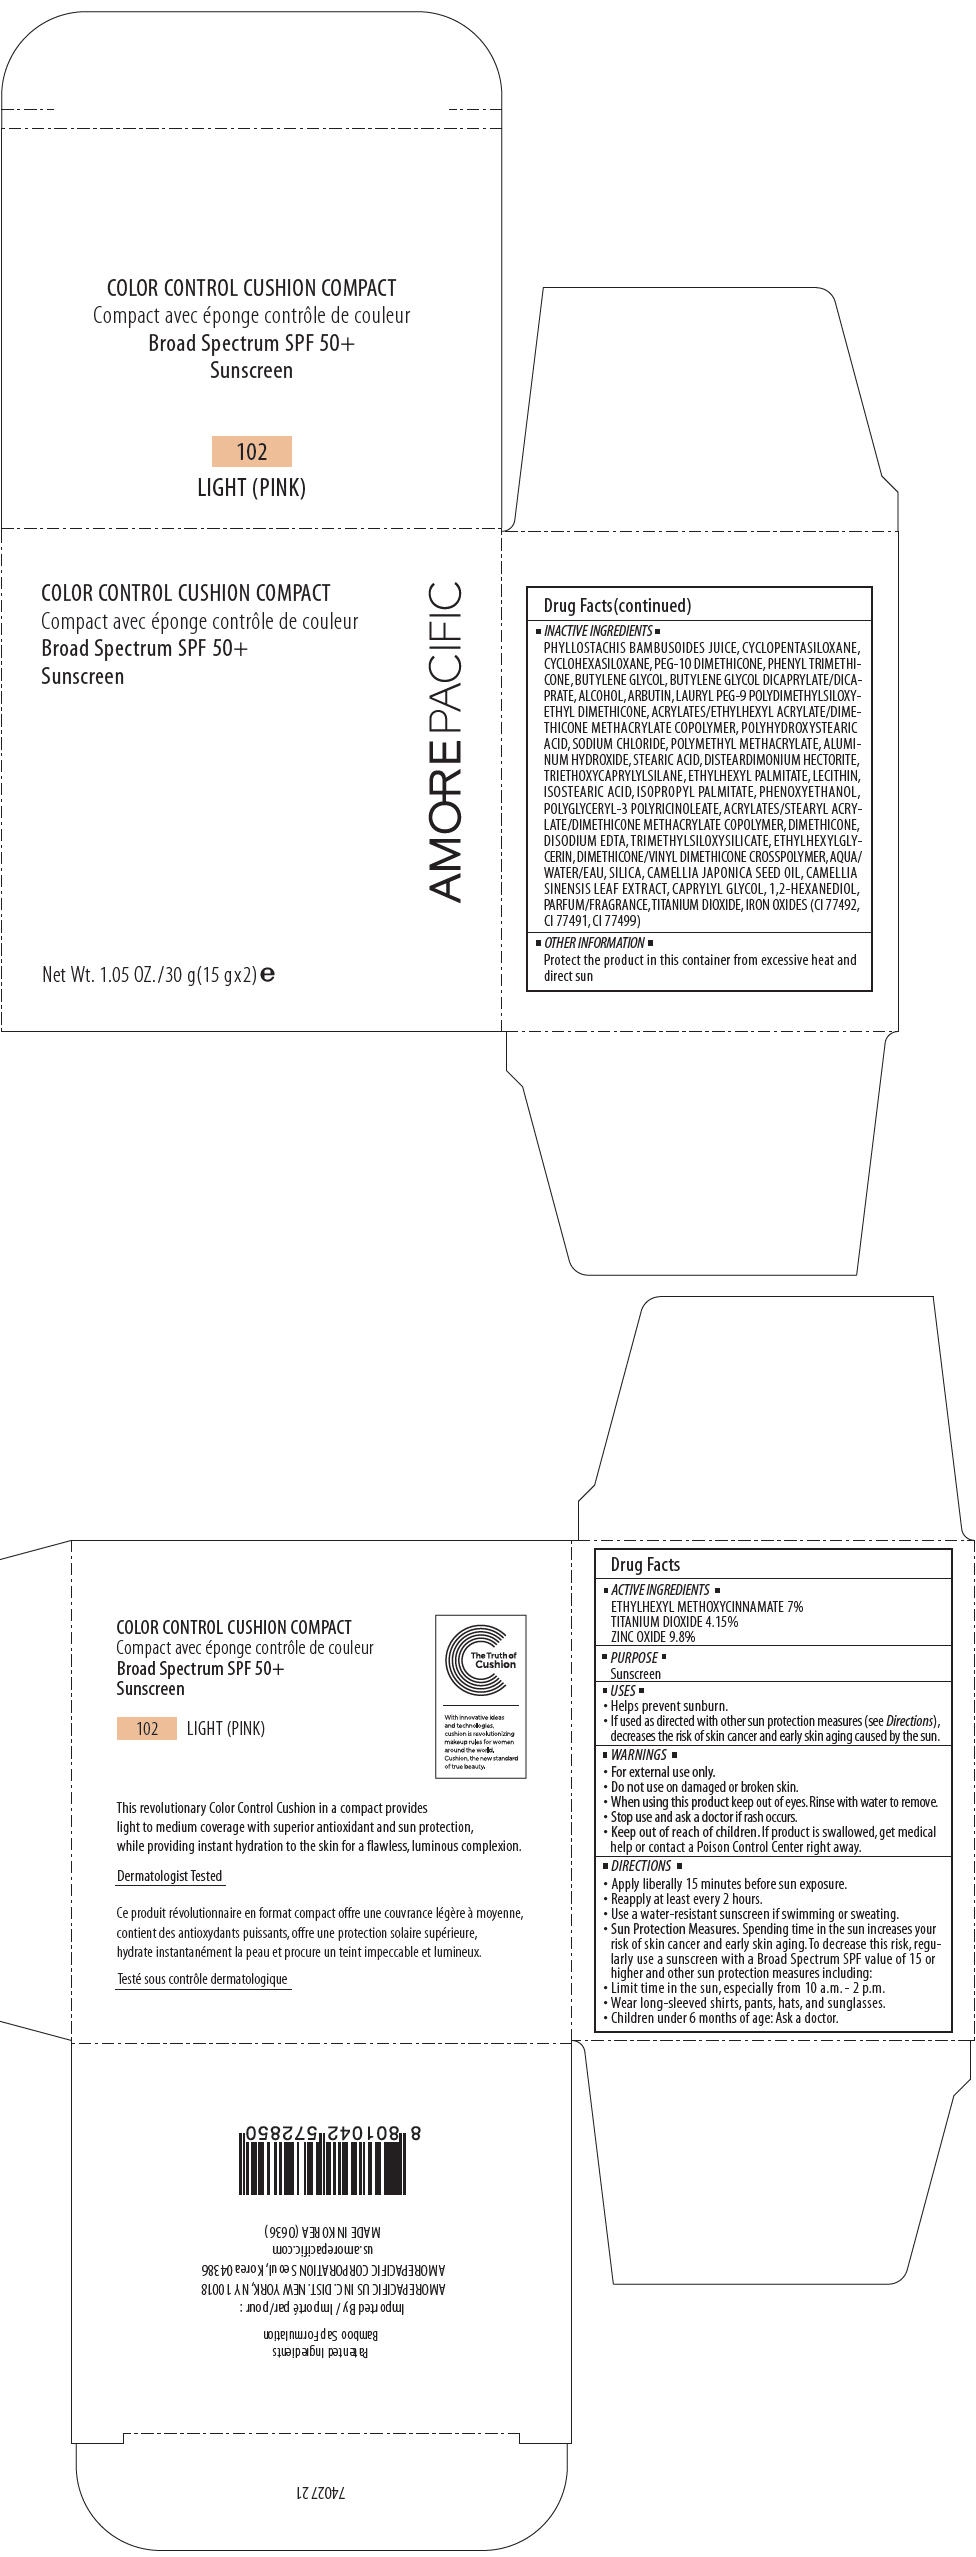 PRINCIPAL DISPLAY PANEL - 30 g (15 g x 2) Container Carton